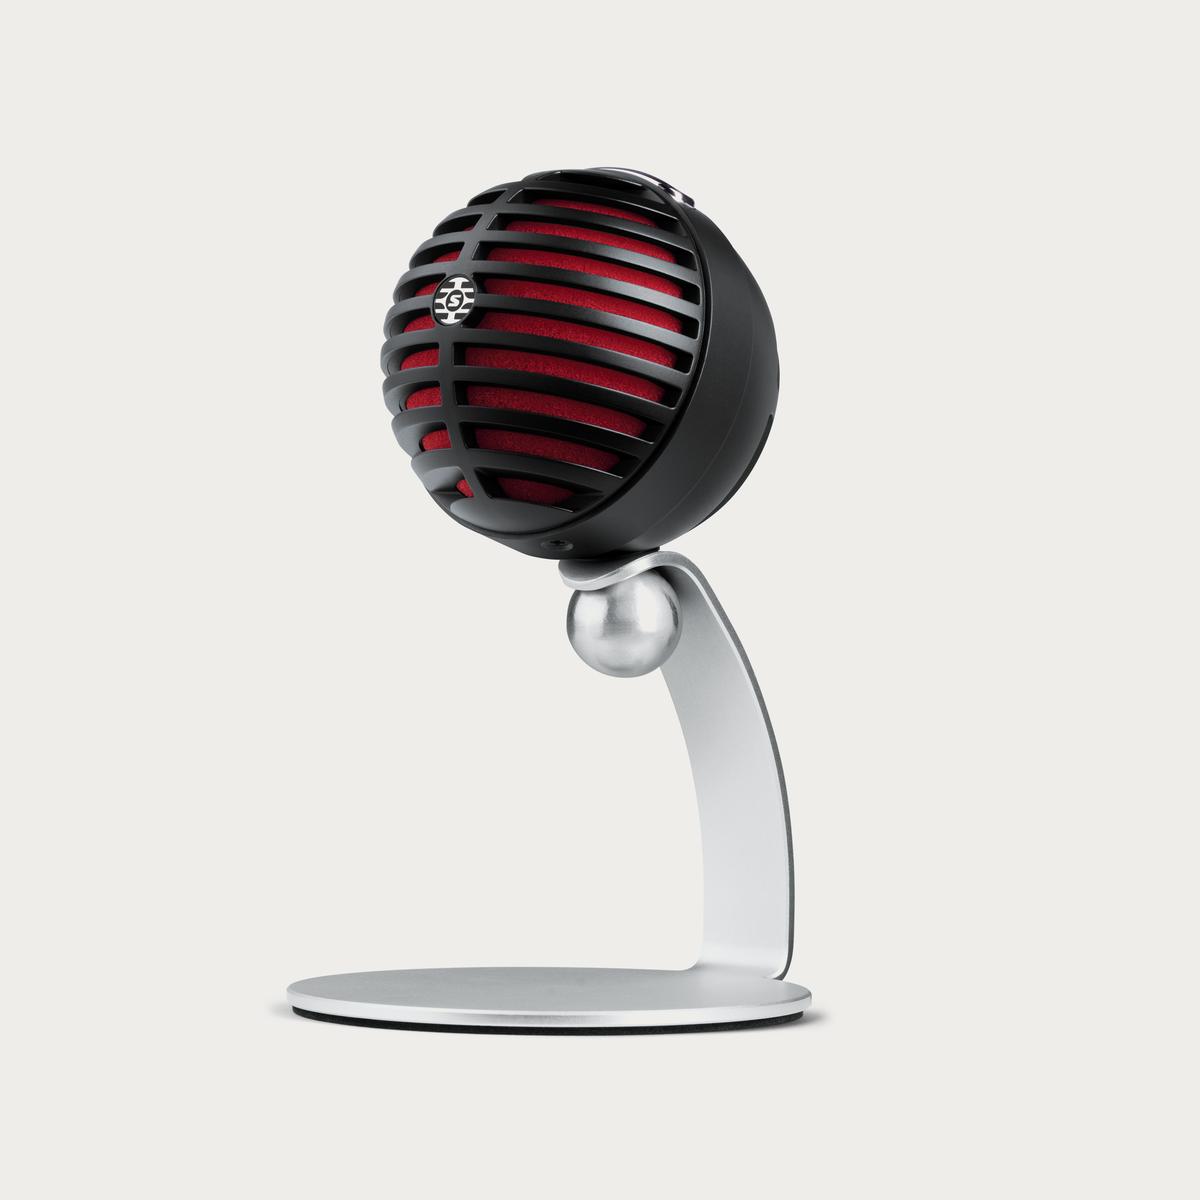 MV5 Digital Condenser Microphone - Black